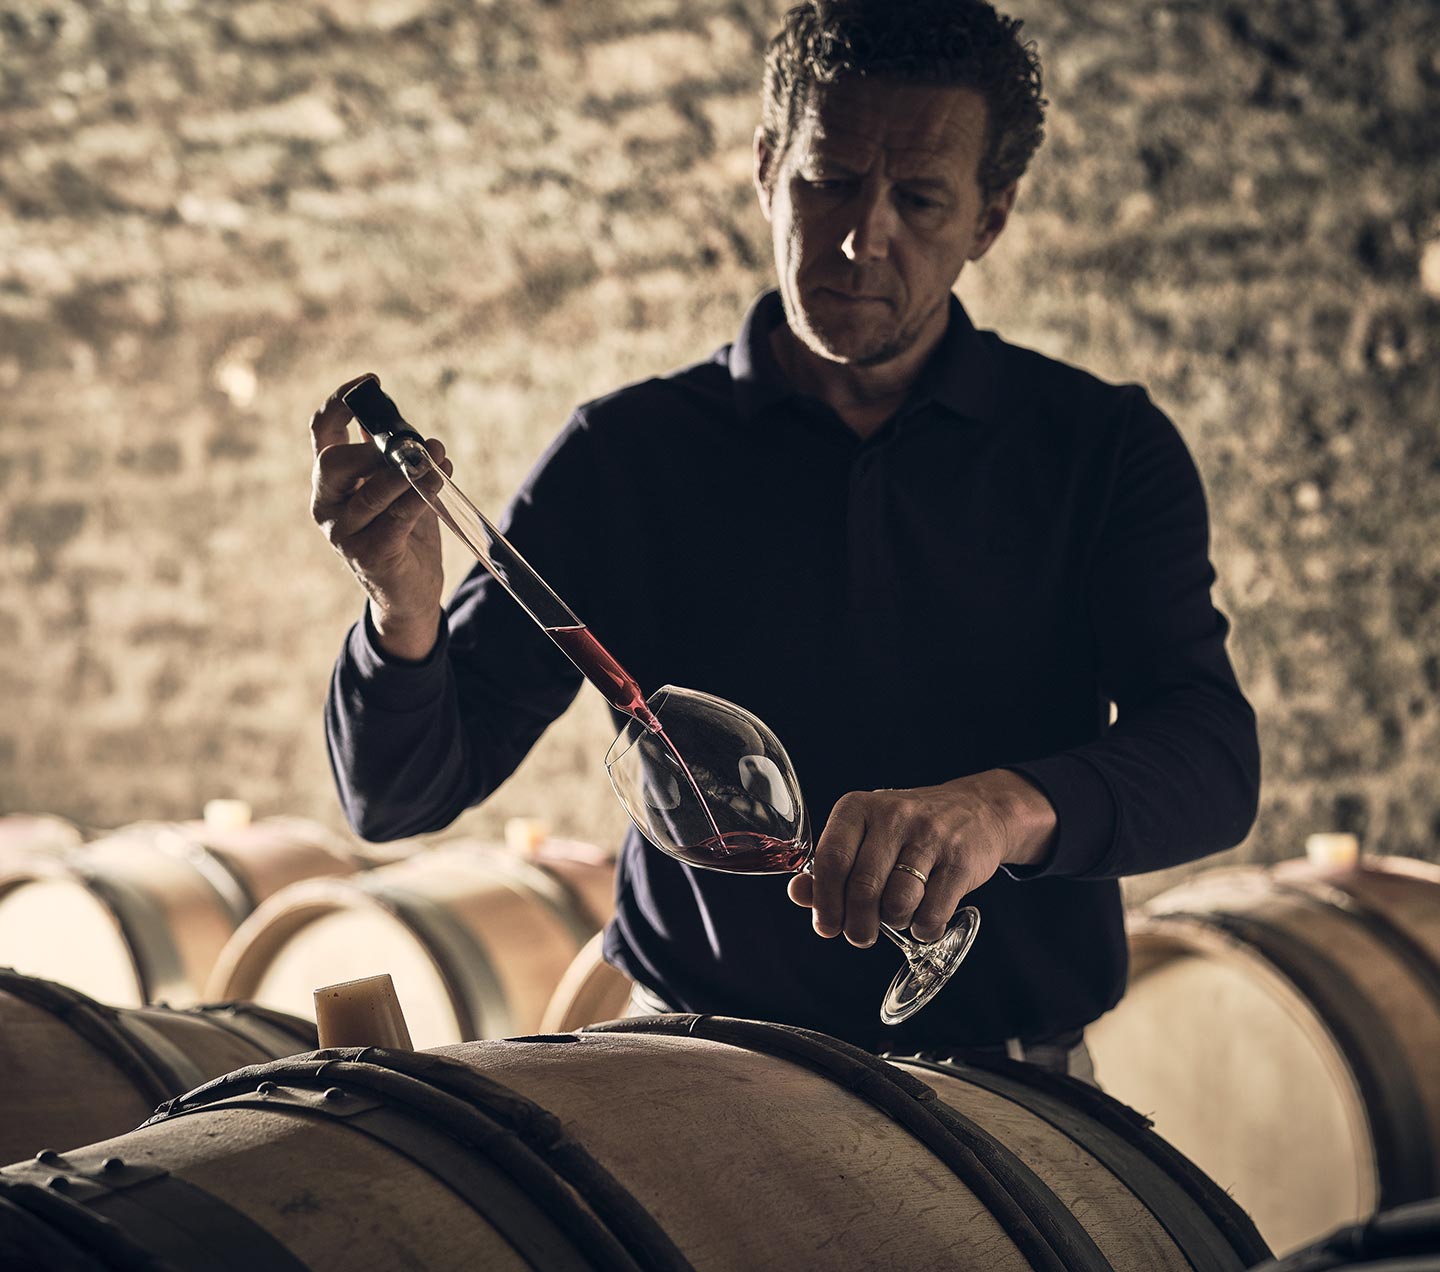 david-duband-expert-vinification-vins-mia